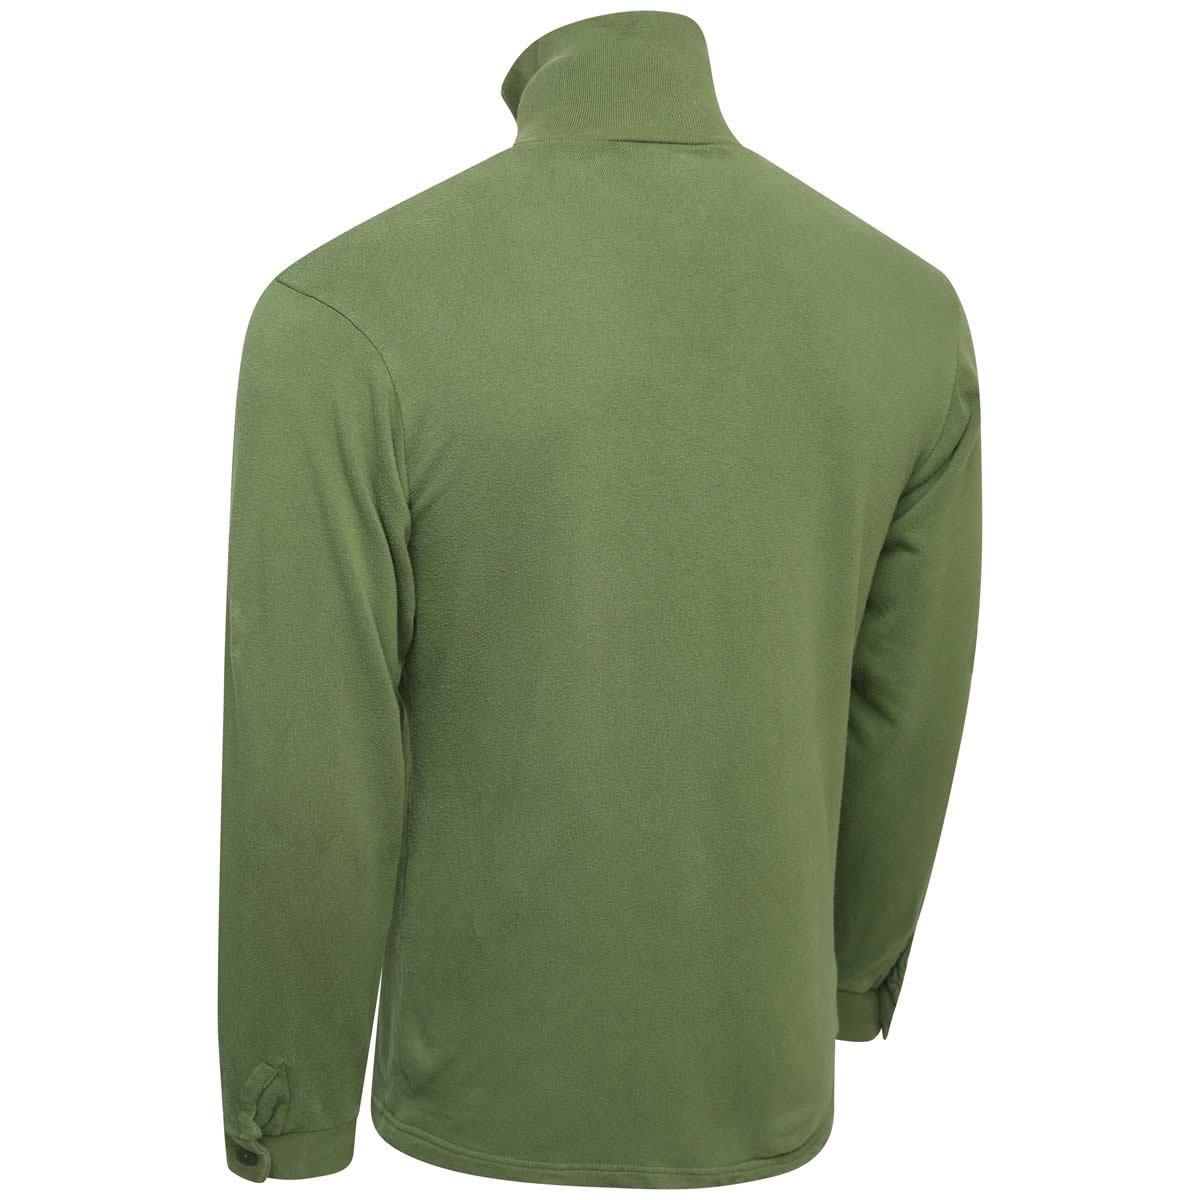 Army thermal fleece  Zipped Green  Shirt Norgie Style Long Sleeve Base Layer Top 